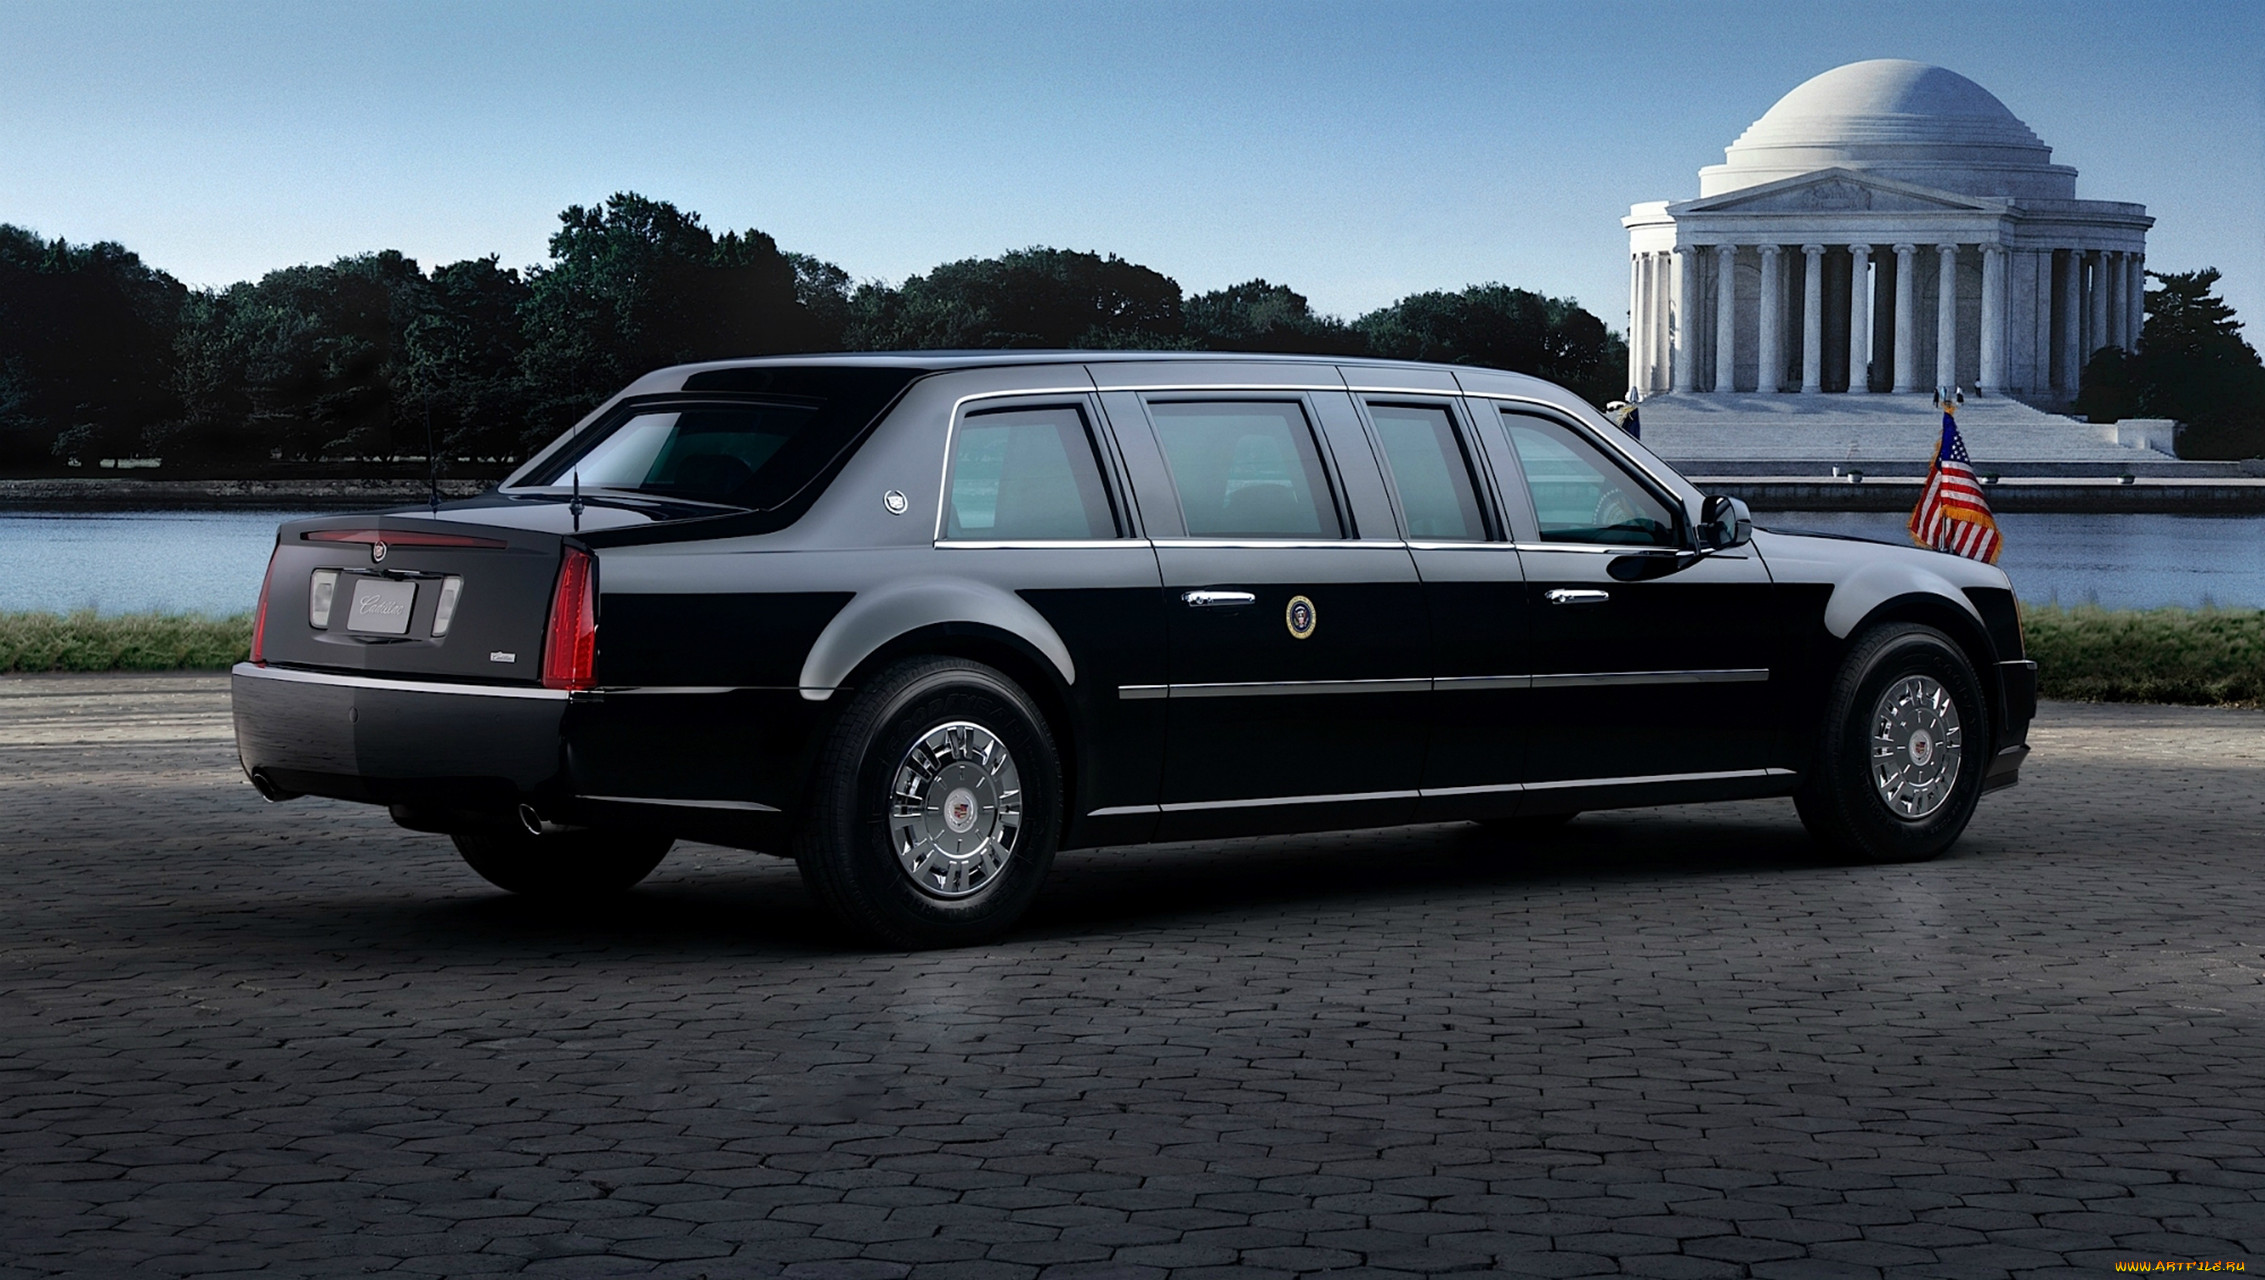 cadillac one barack obama`s new presidential limousine 2009, , cadillac, barack, one, 2009, limousine, presidential, new, obama